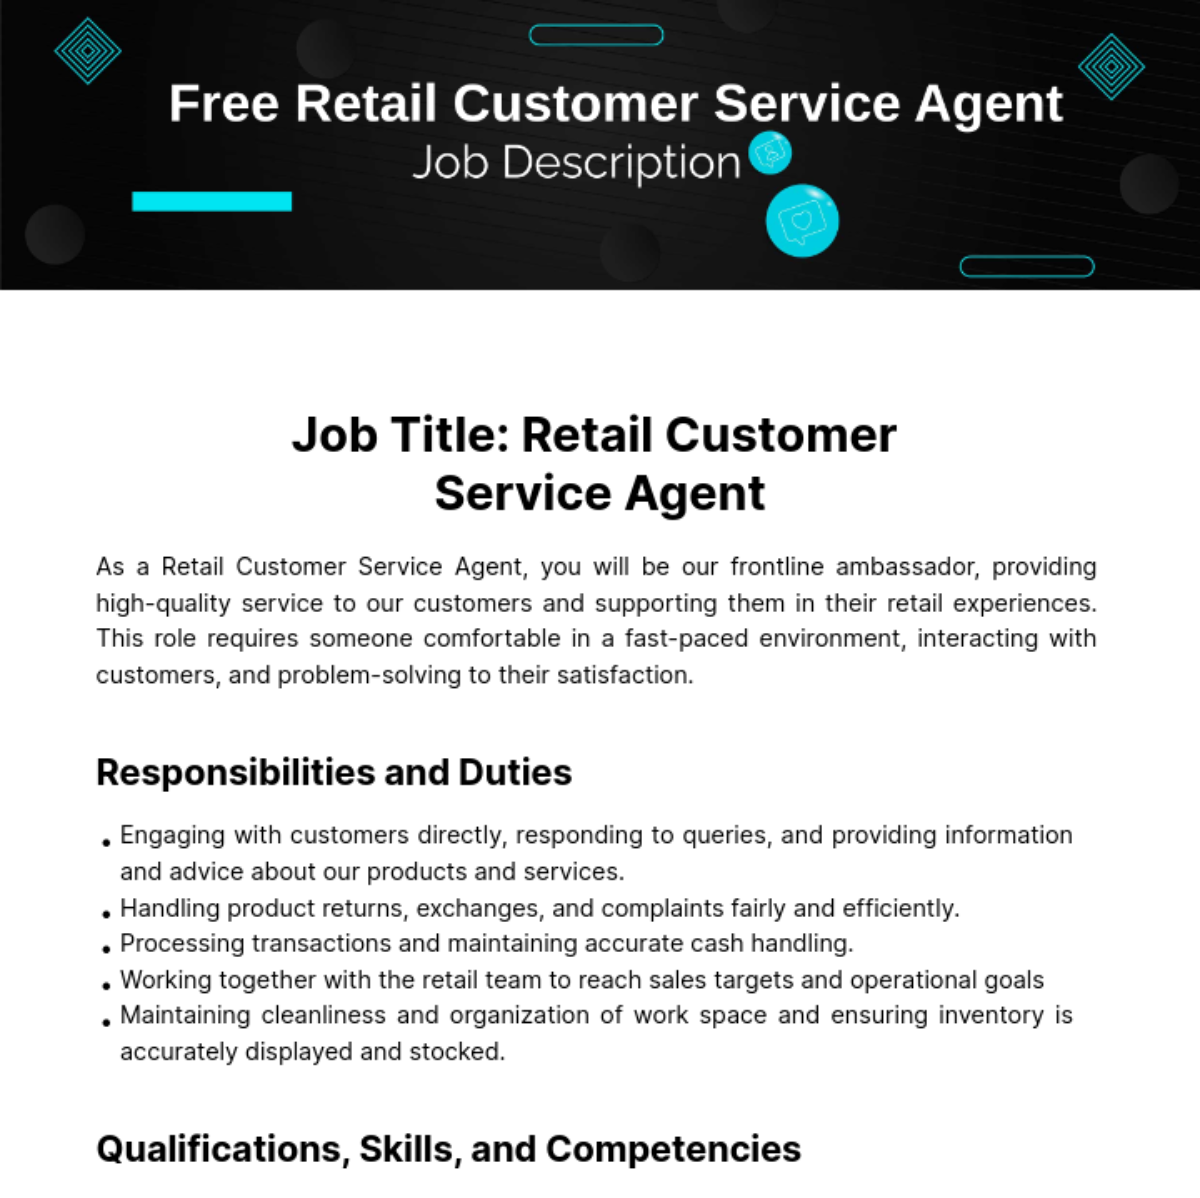 Free Retail Customer Service Job Description Template